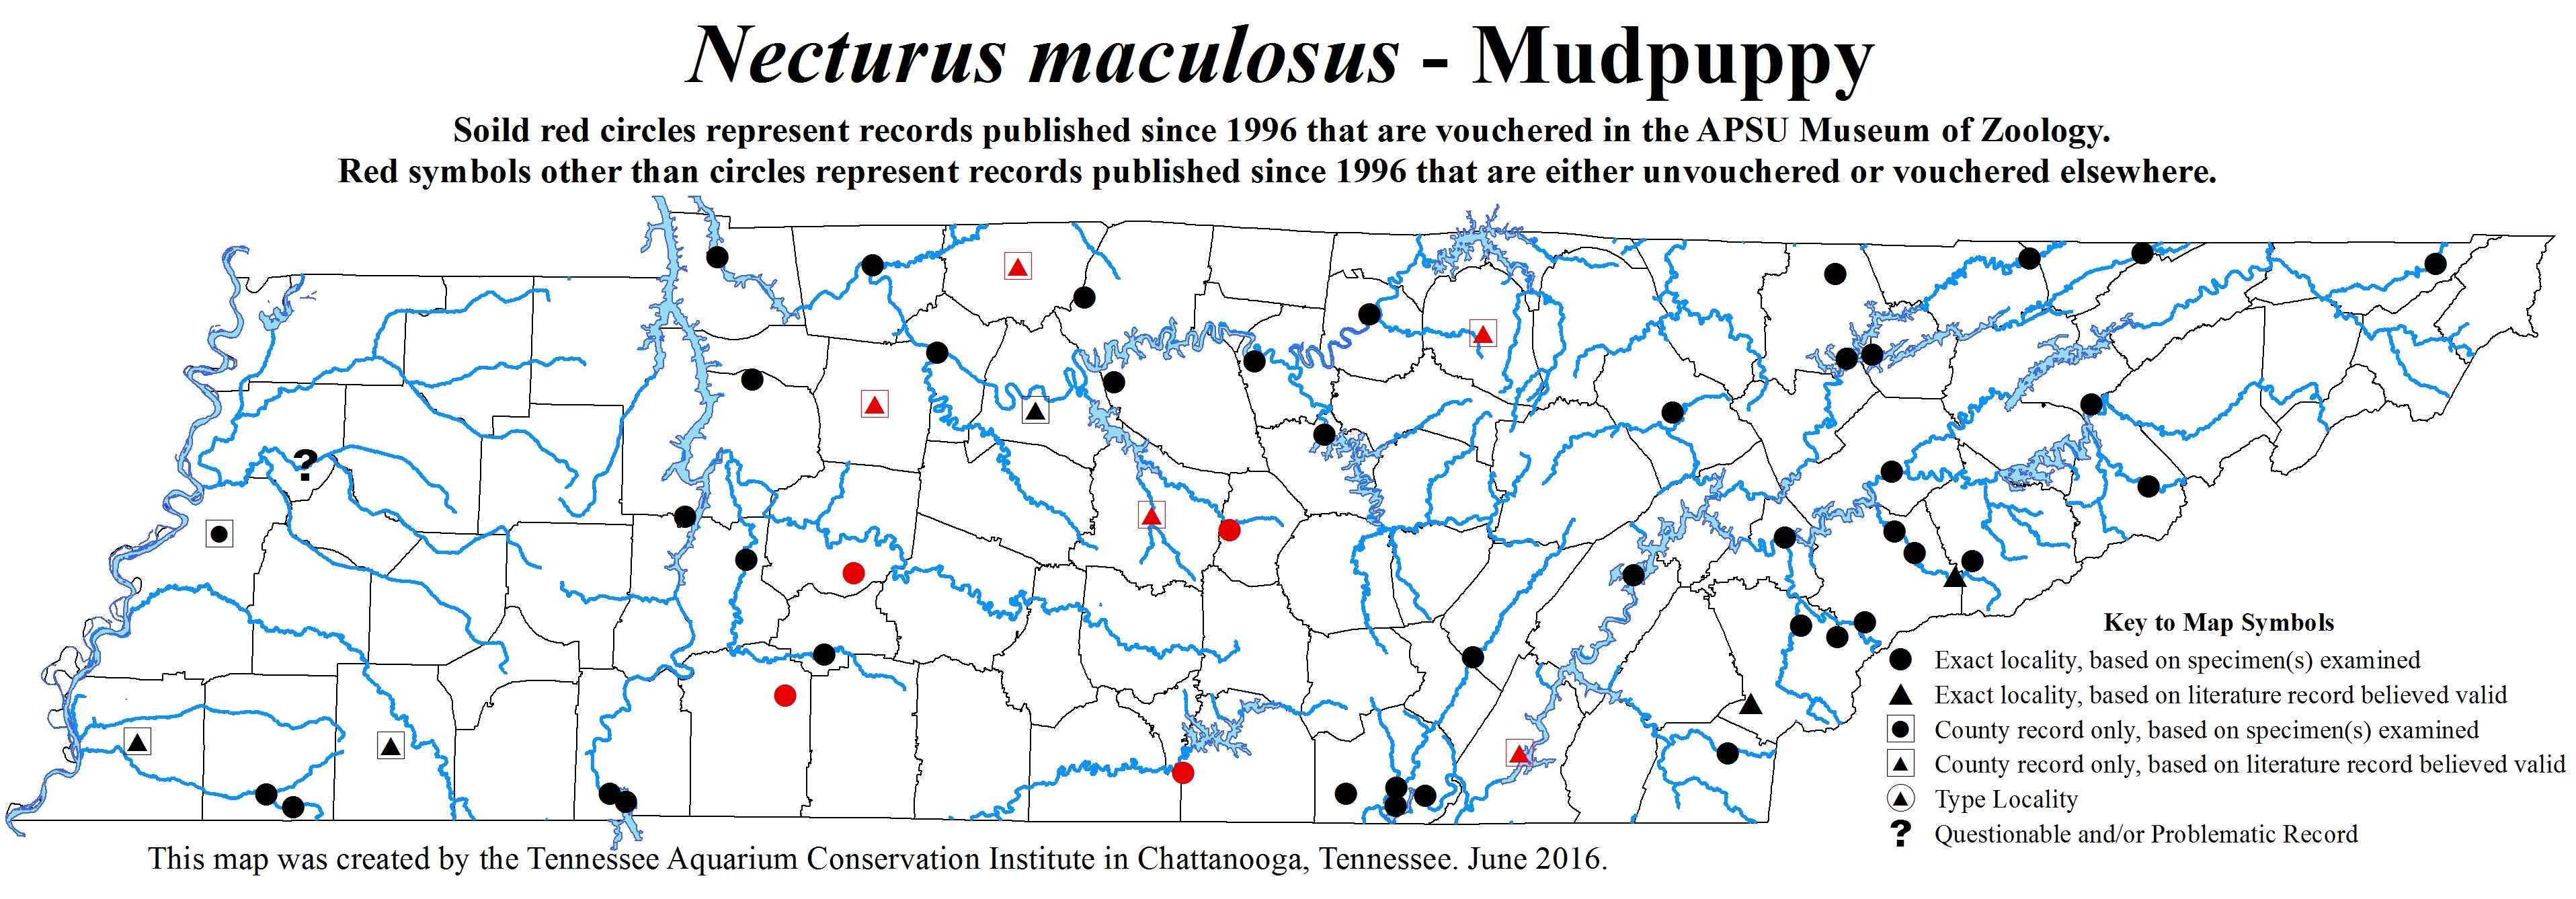 Update to Necturus maculosus